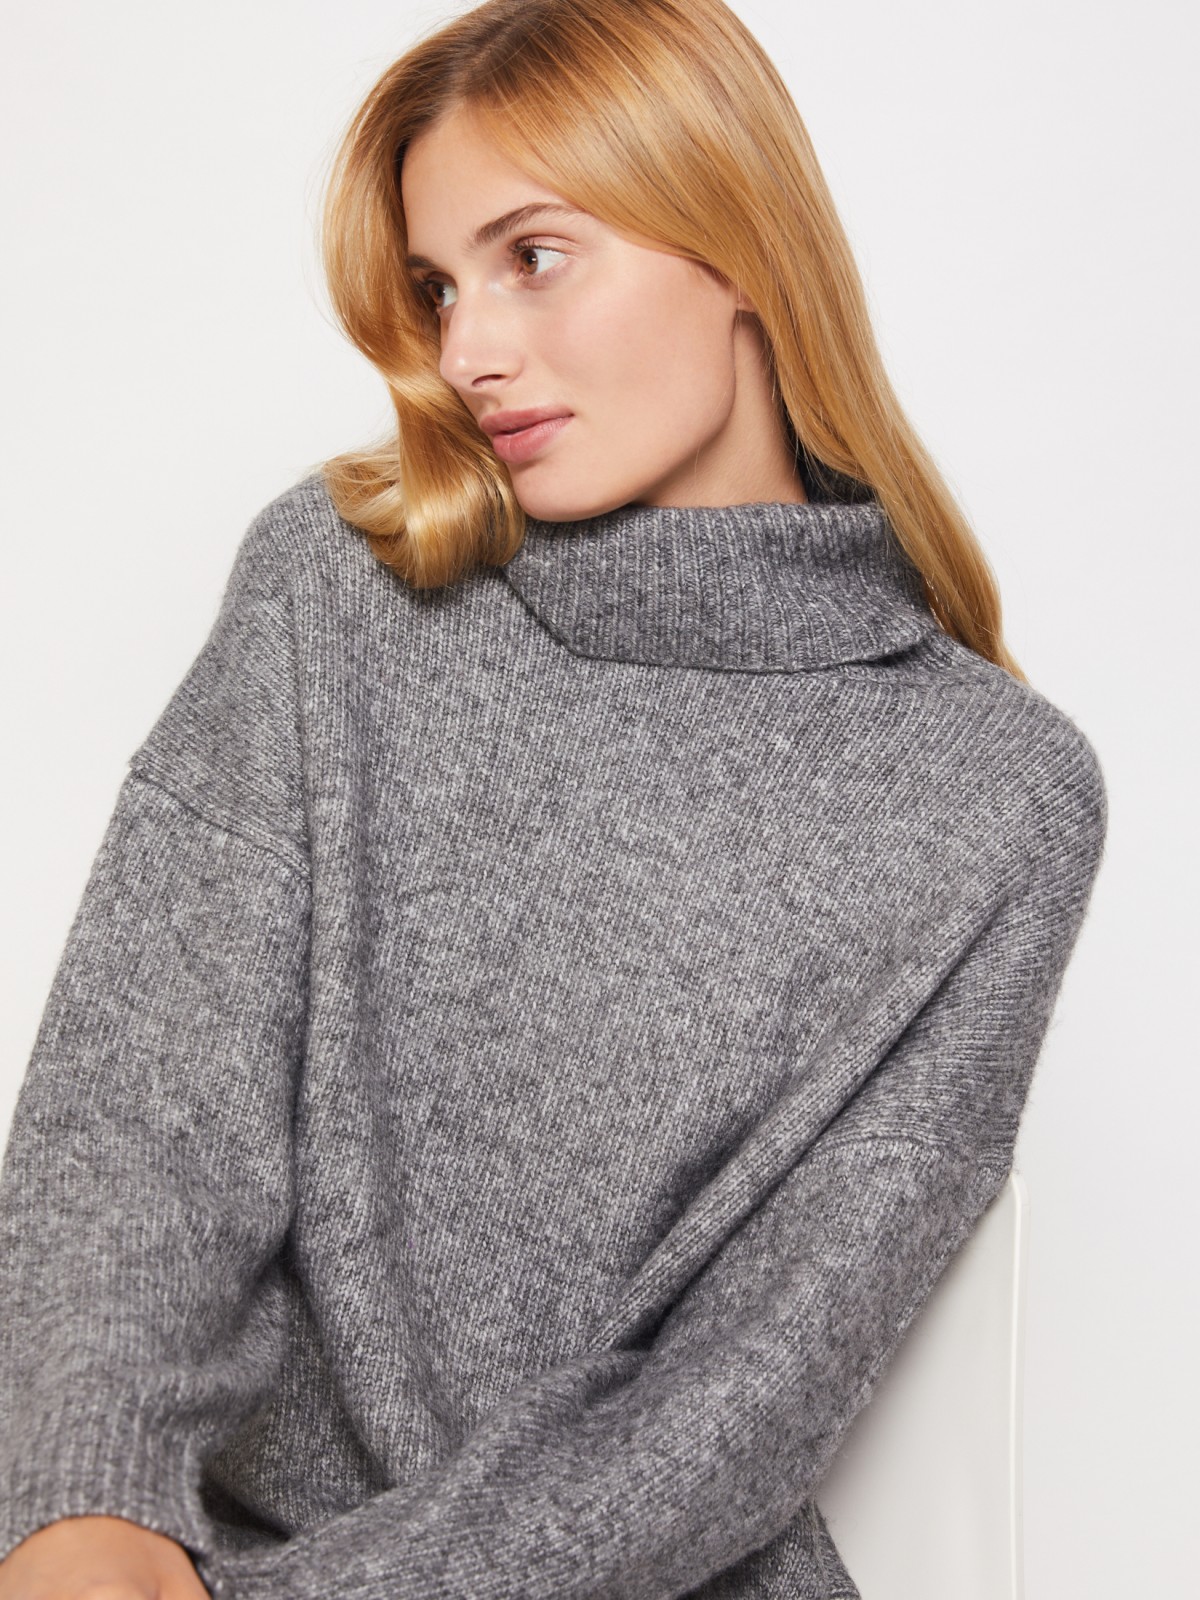 Вязаный свитер оверсайз zolla 221346193063, цвет серый, размер XS - фото 4